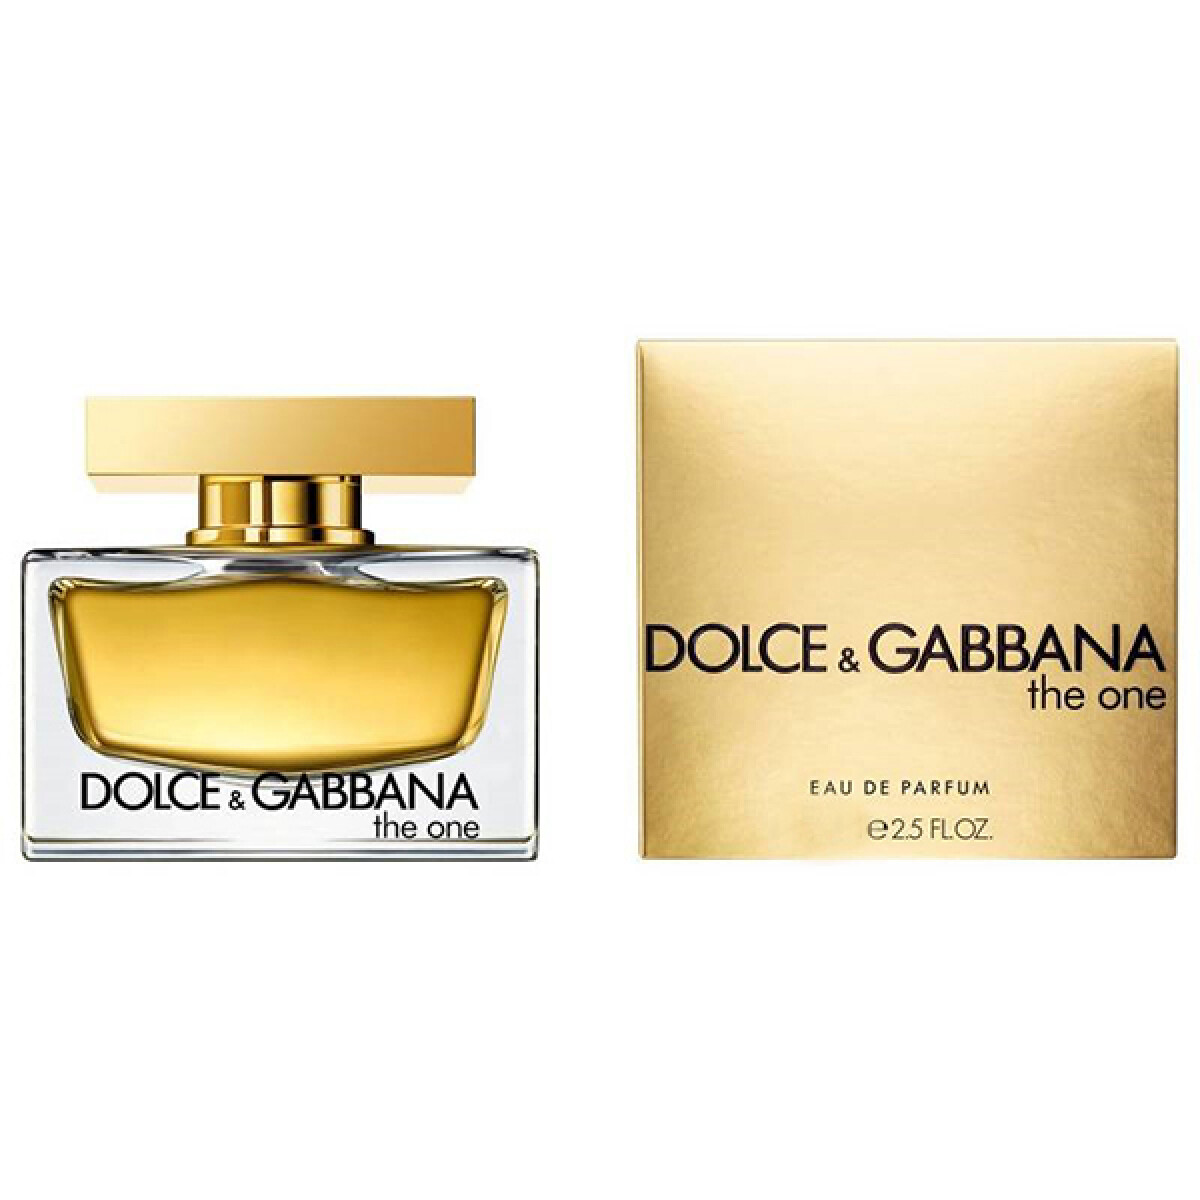 Dolce & Gabbana The one femme - 30 ml 